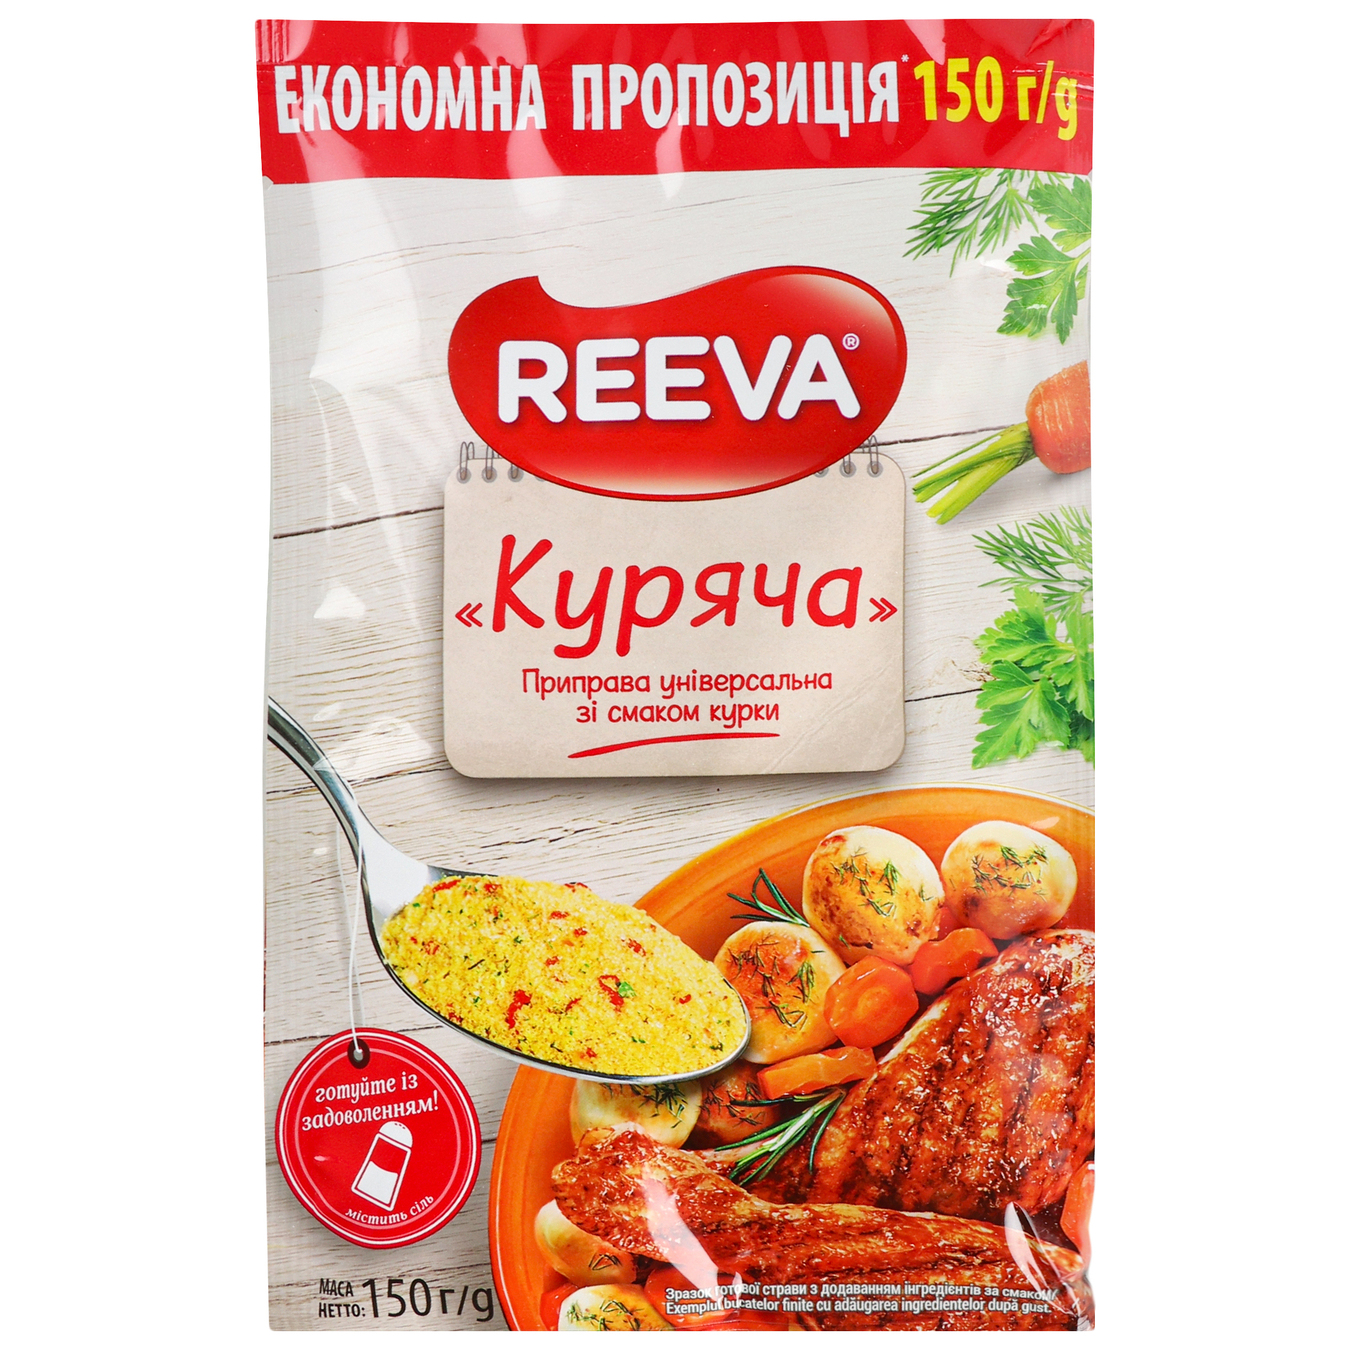 Reeva universal seasoning with chicken flavor 150g